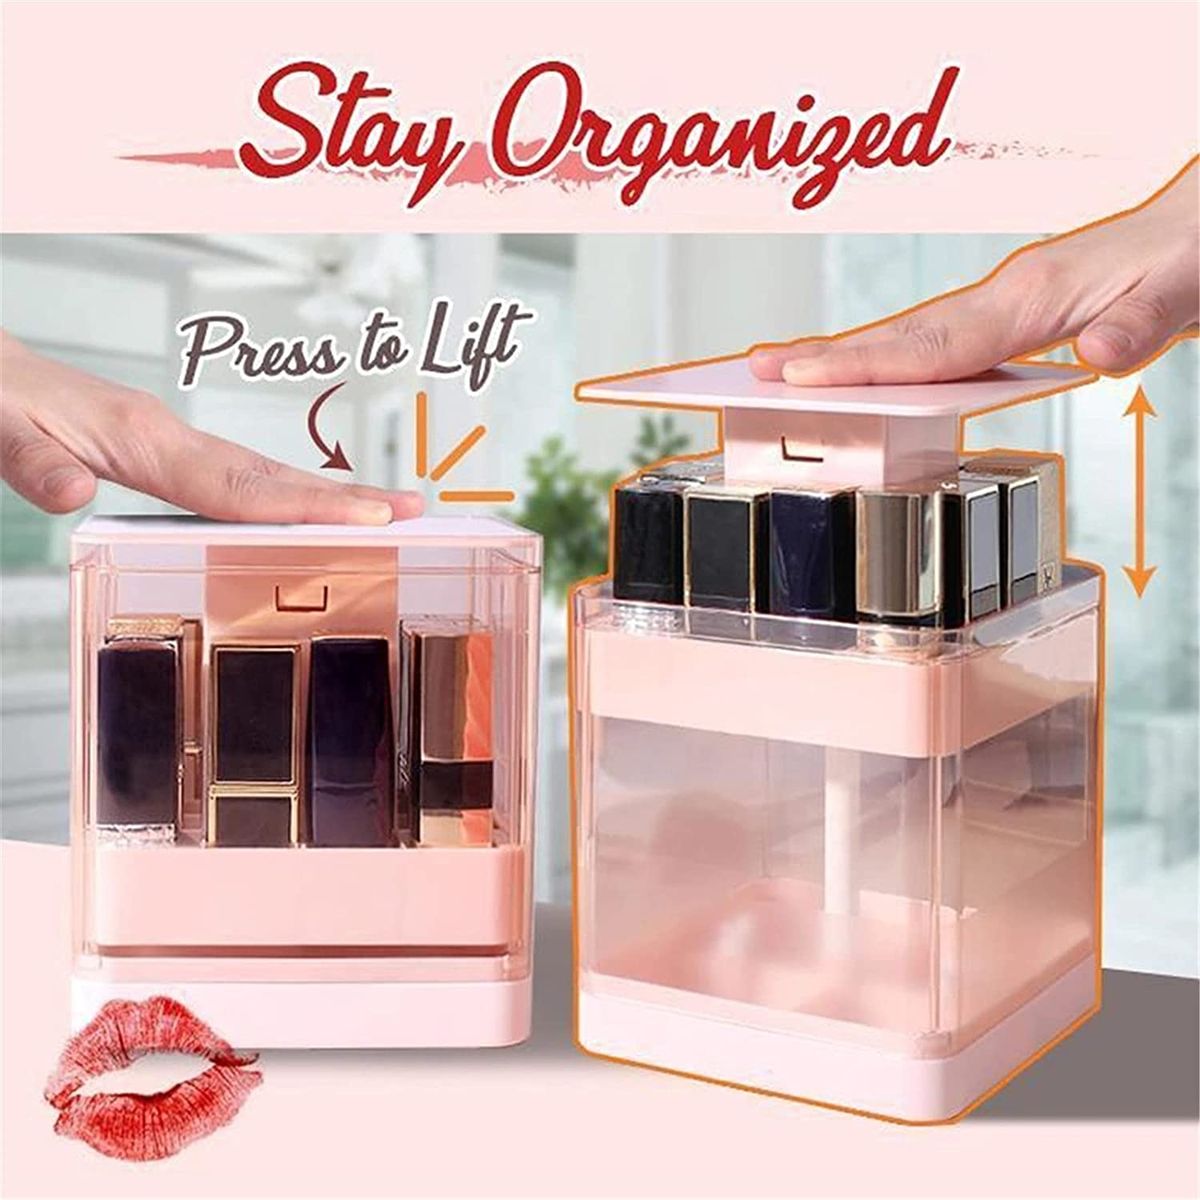 8/12 Grids Press Lift Cosmetic Storage Box, Press-To-Open Lipstick Organizer For Fast Pick